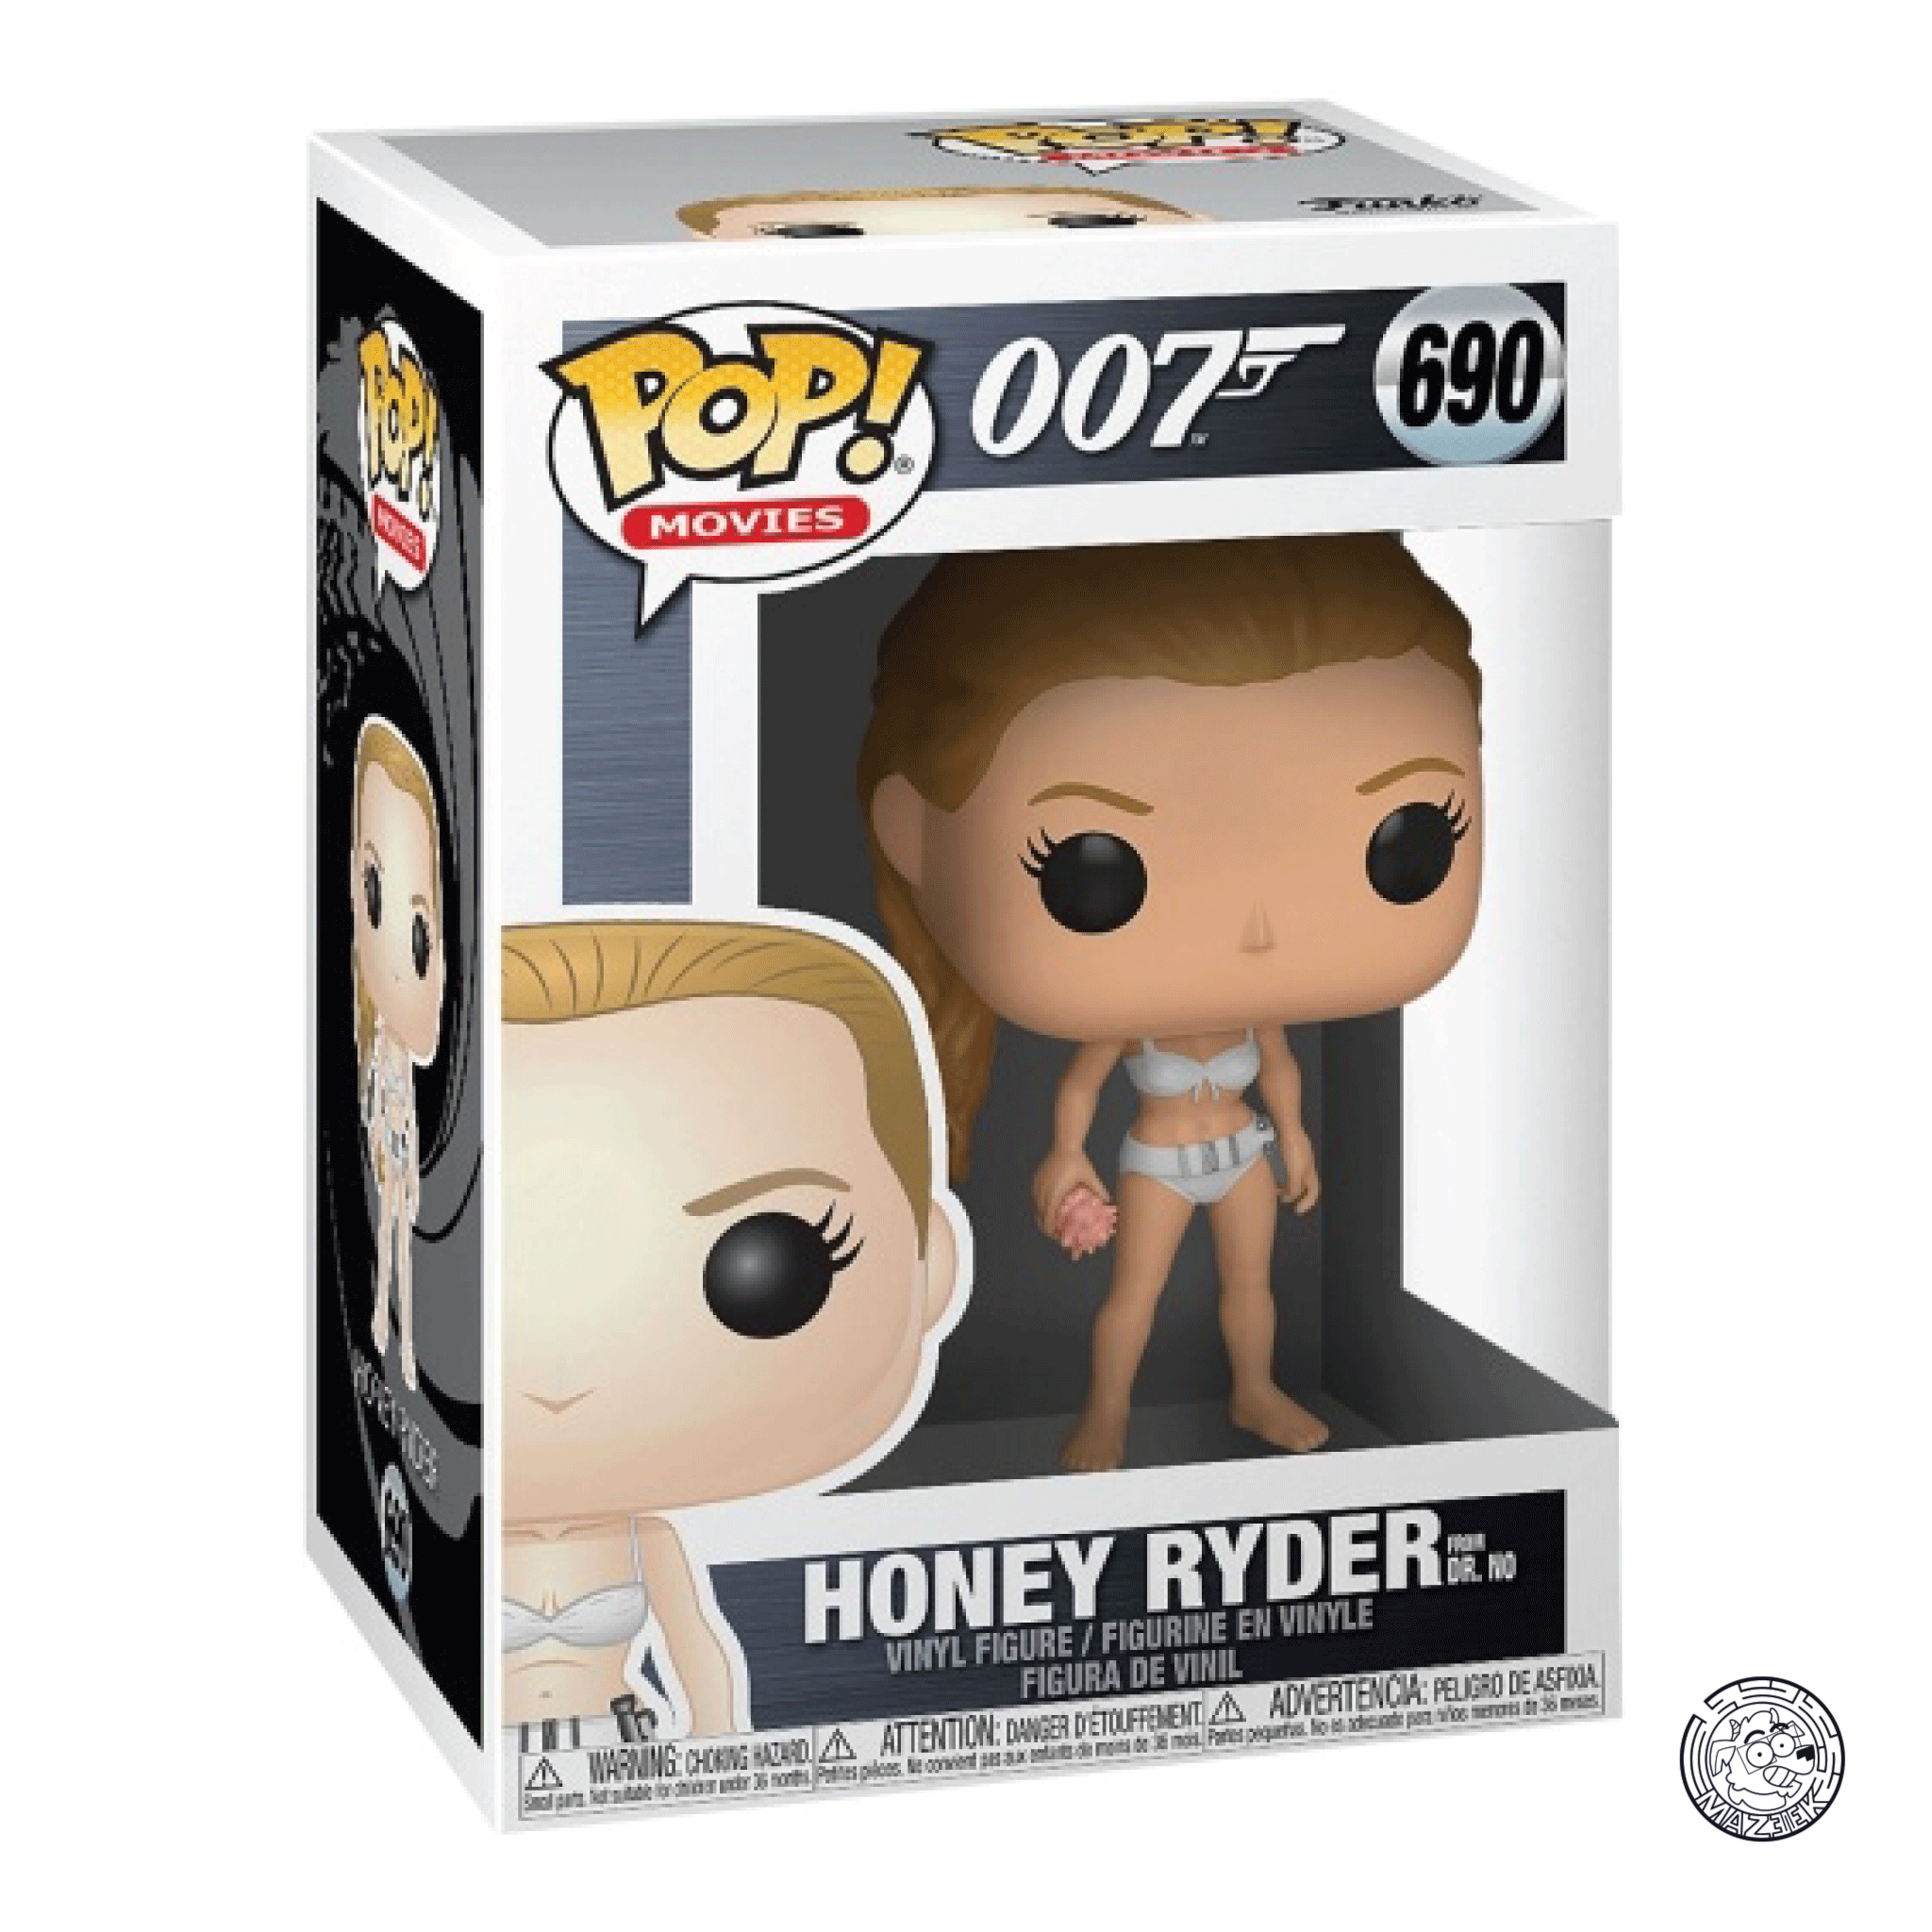 Funko POP! 007: Honey Ryder 690